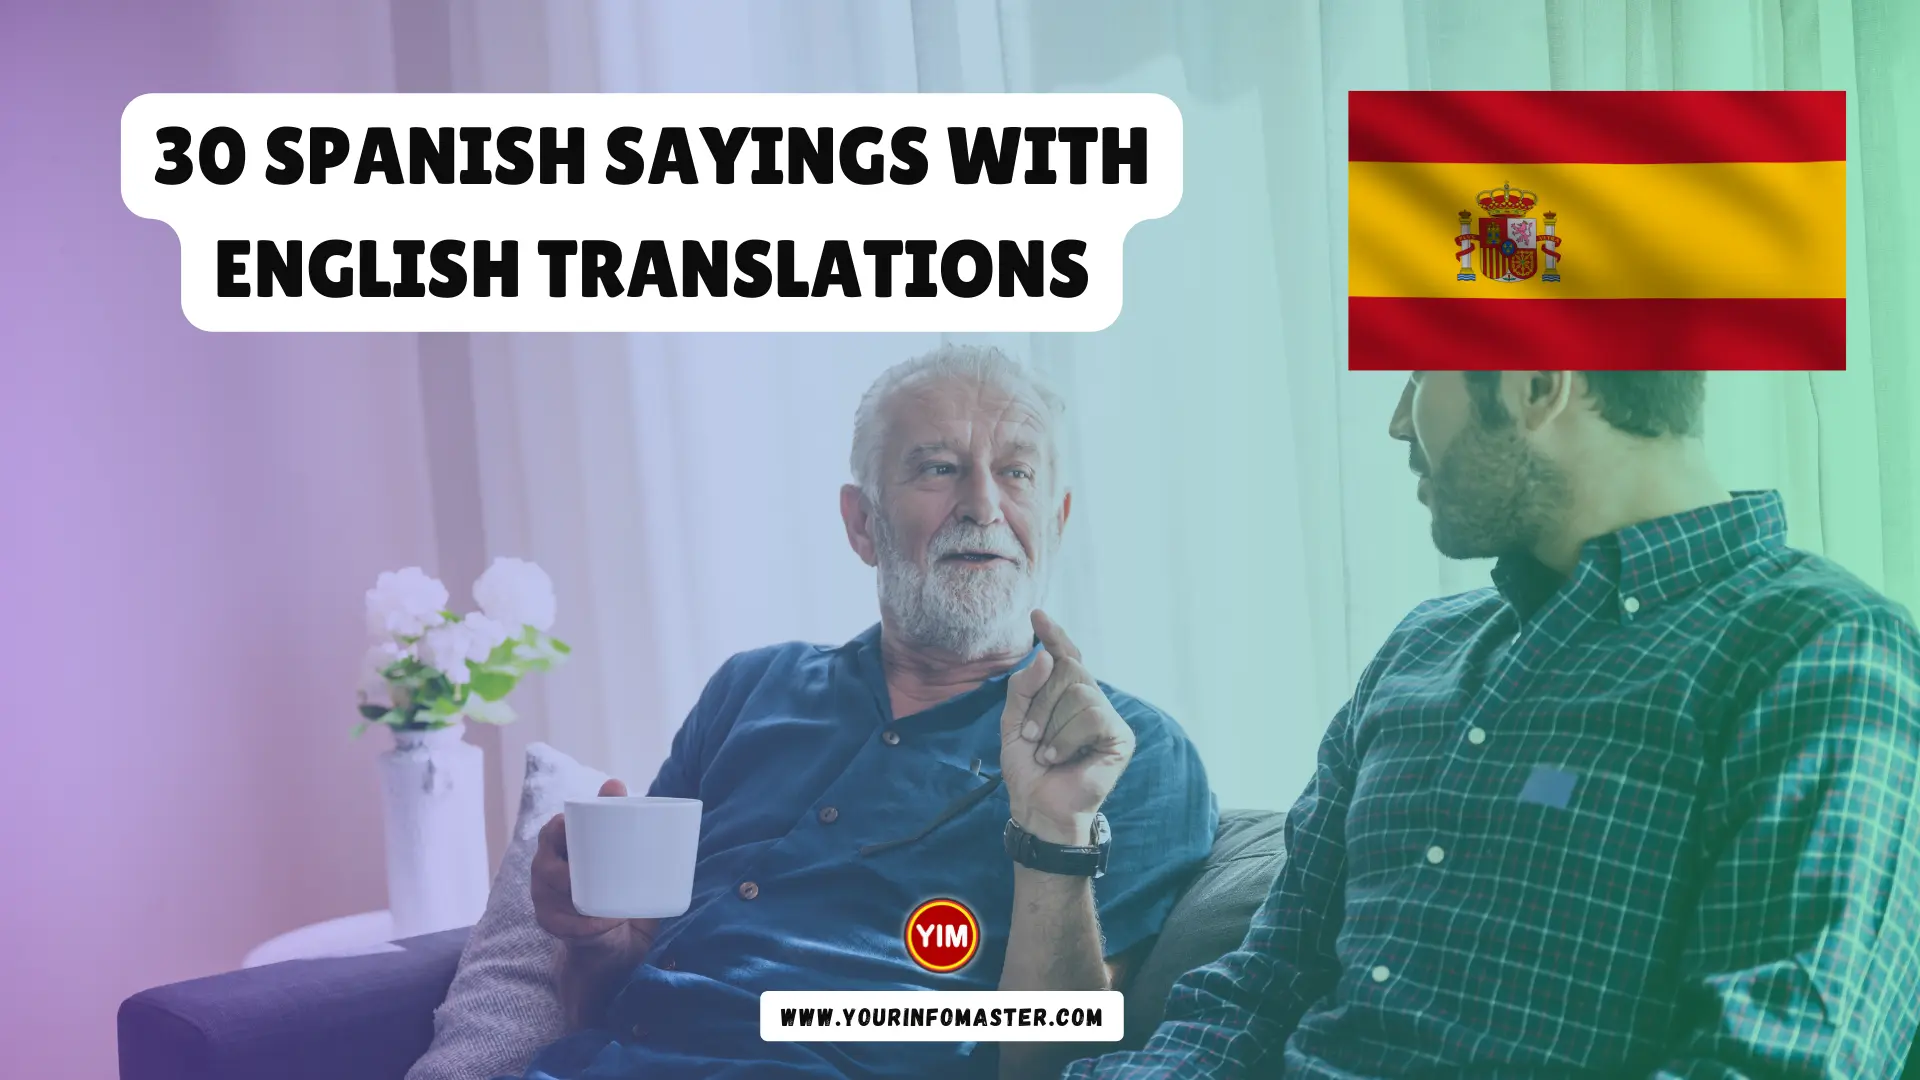 30 Spanish Sayings With English Translations